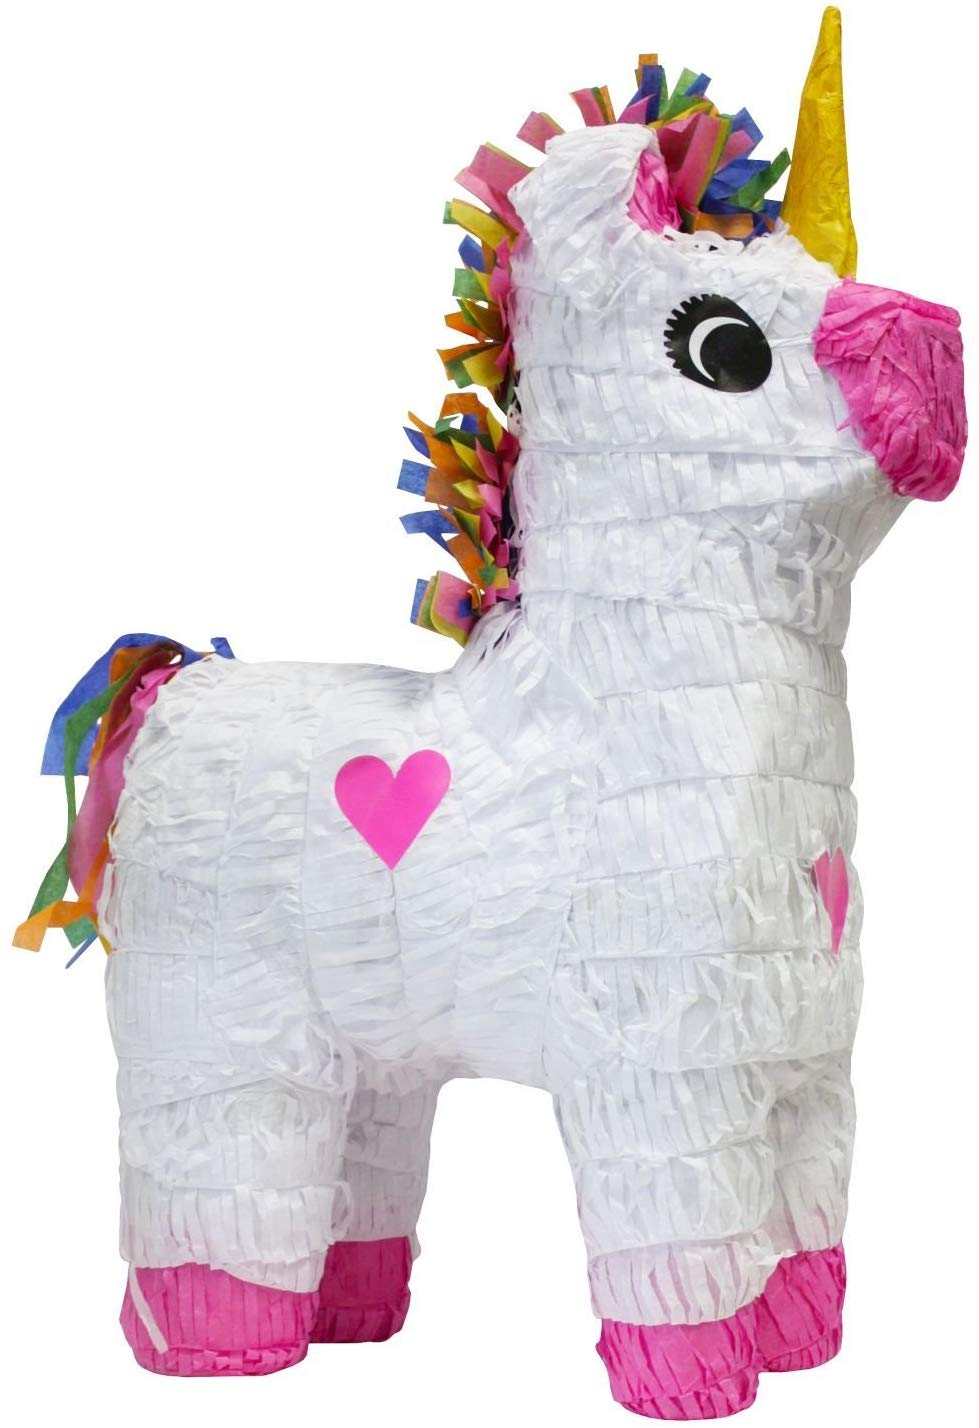 YA OTTA PINATA Cardboard & Tissue Unicorn Piñata